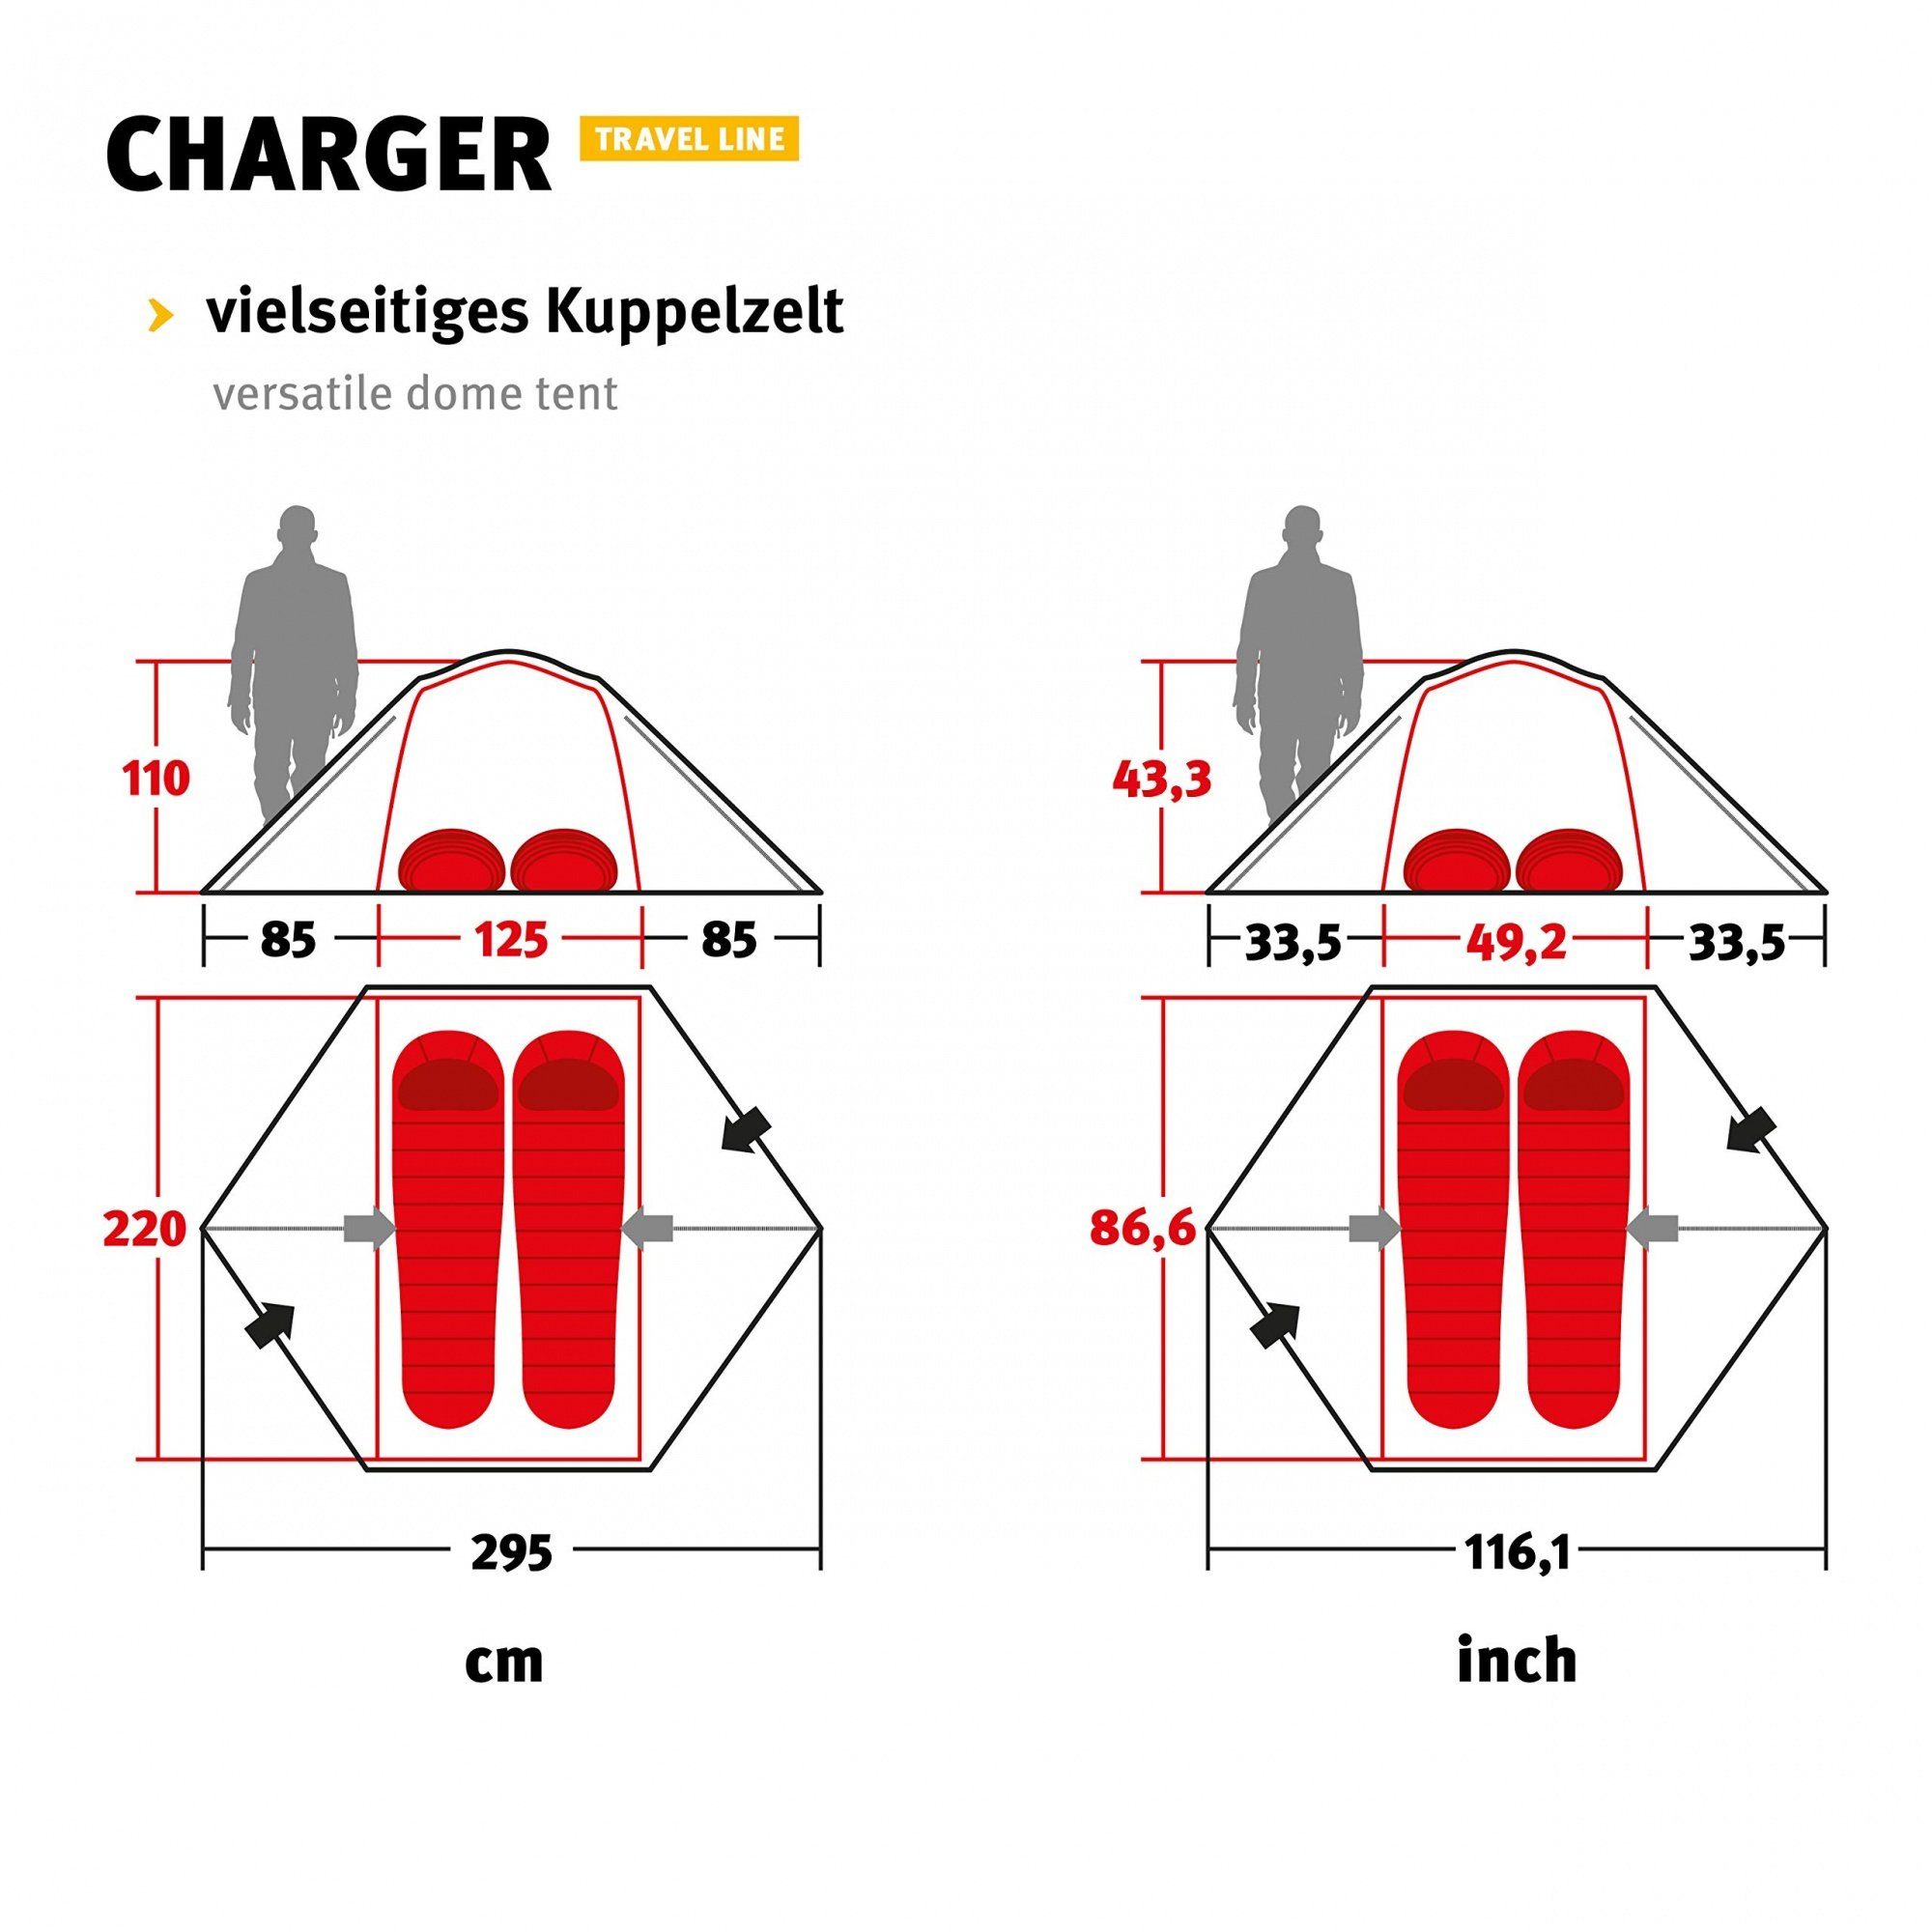 Tents Kuppelzelt 2 - Personen: Kuppelzelt Travel Charger Line Vielseitiges Zelt, Geodät 2-Personen Wechsel -